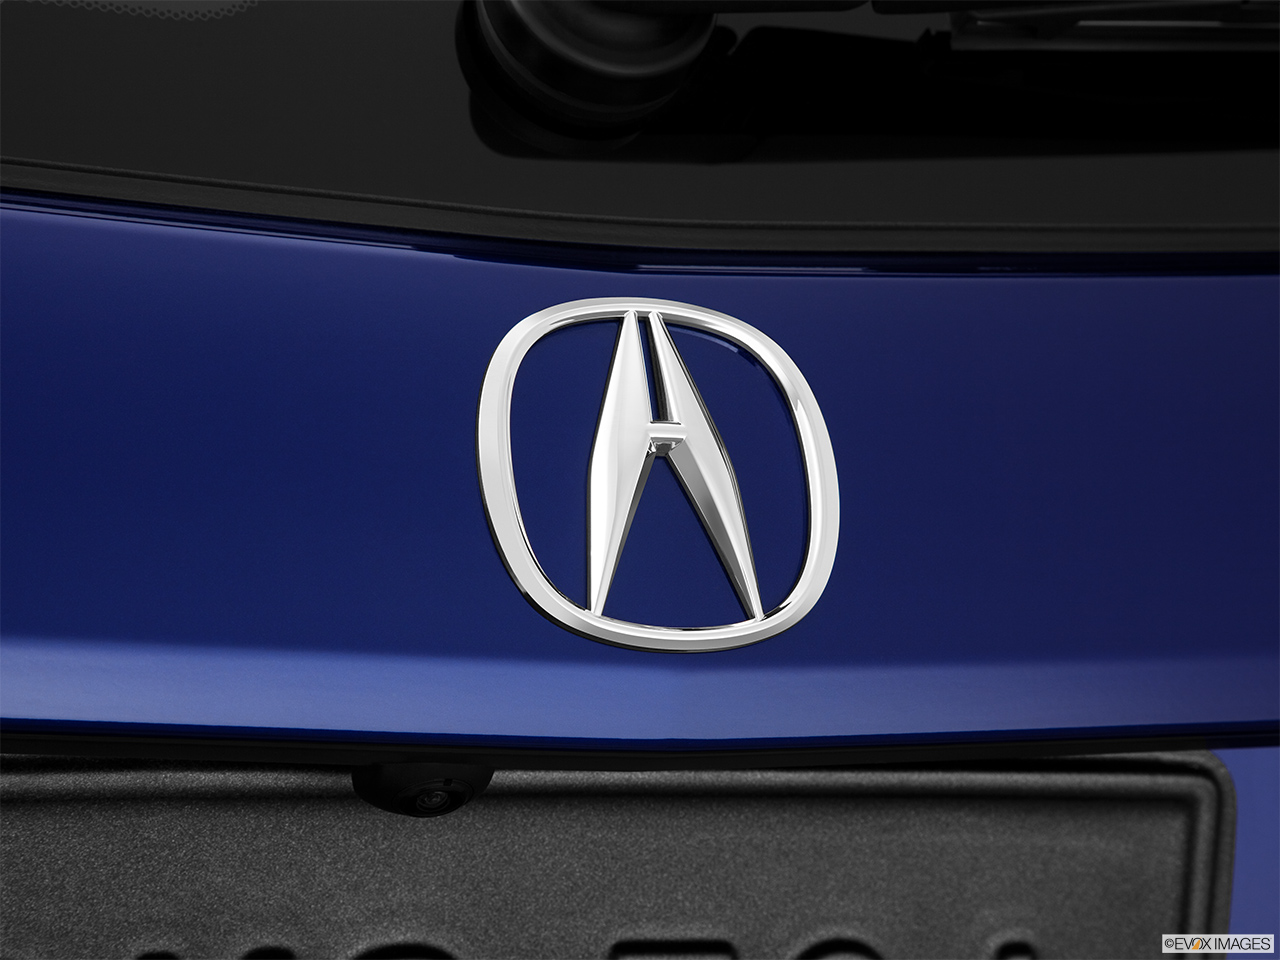 2011 Acura TSX Sport Wagon Rear manufacture badge/emblem 